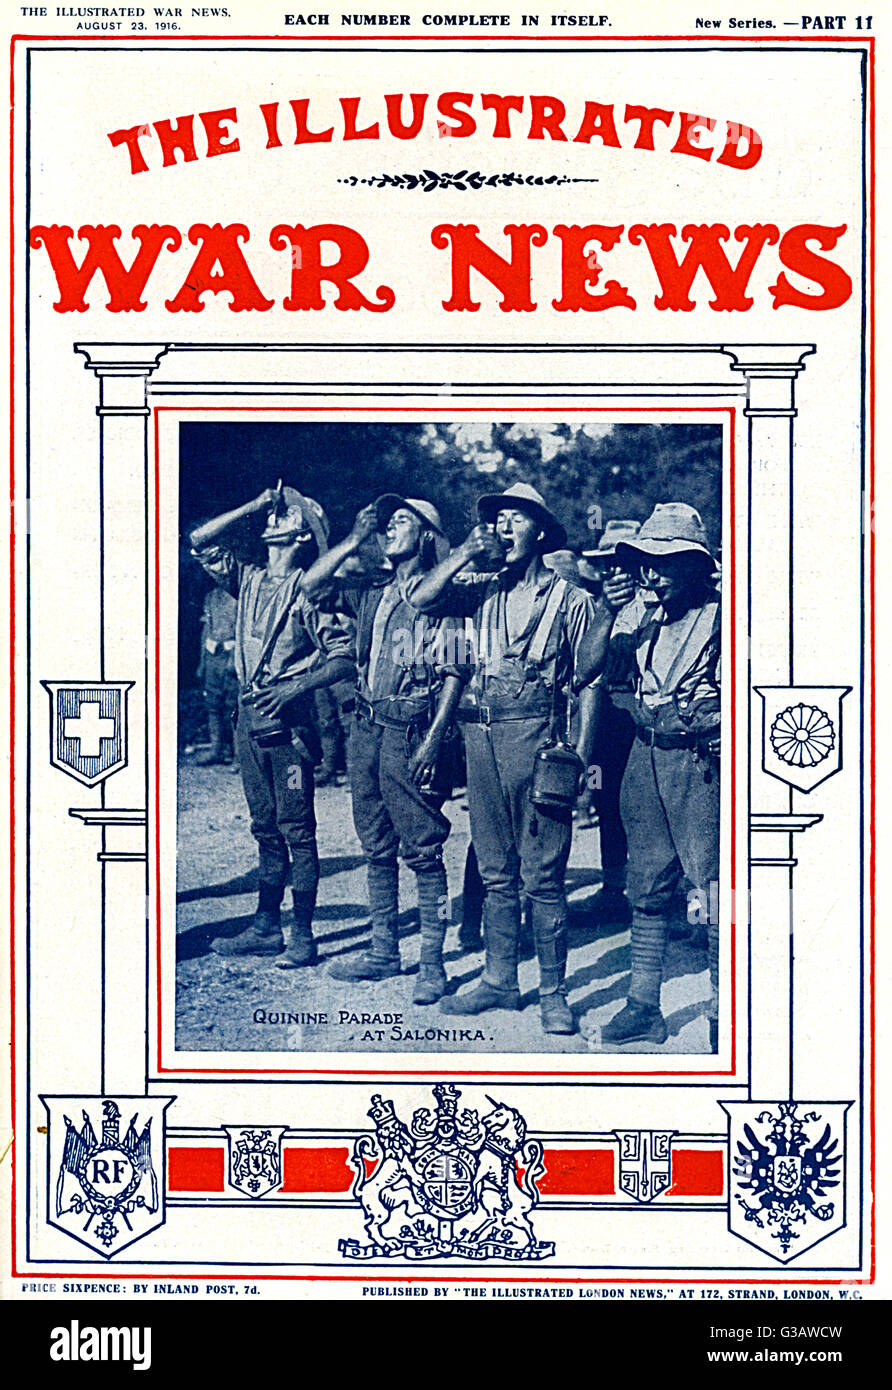 Illustrated War News - Quinine parade in Salonika Stock Photo